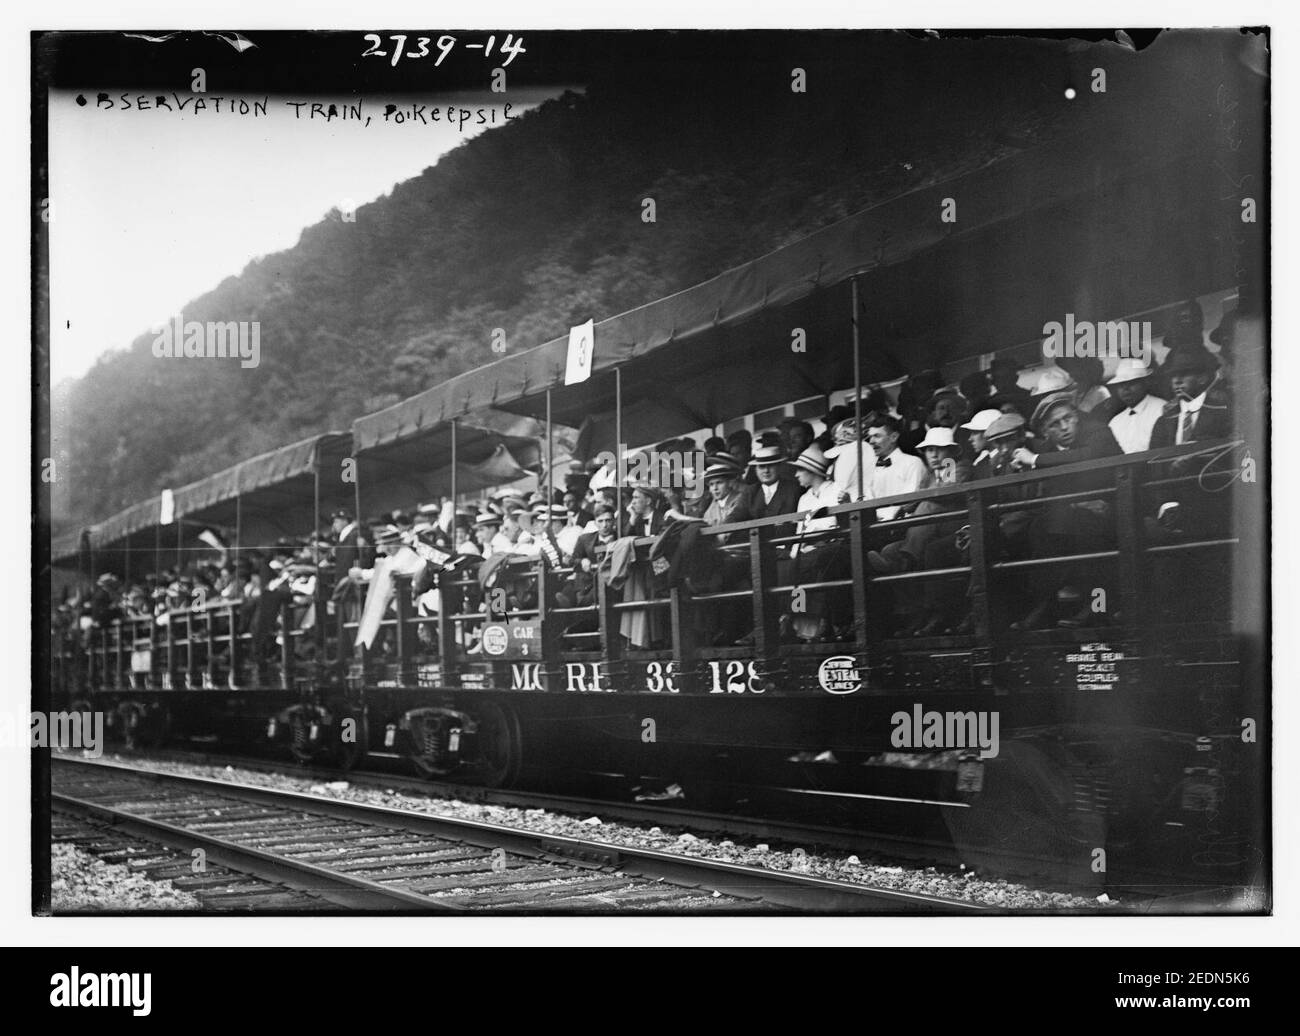 Observation train, Po'keepsie Stock Photo